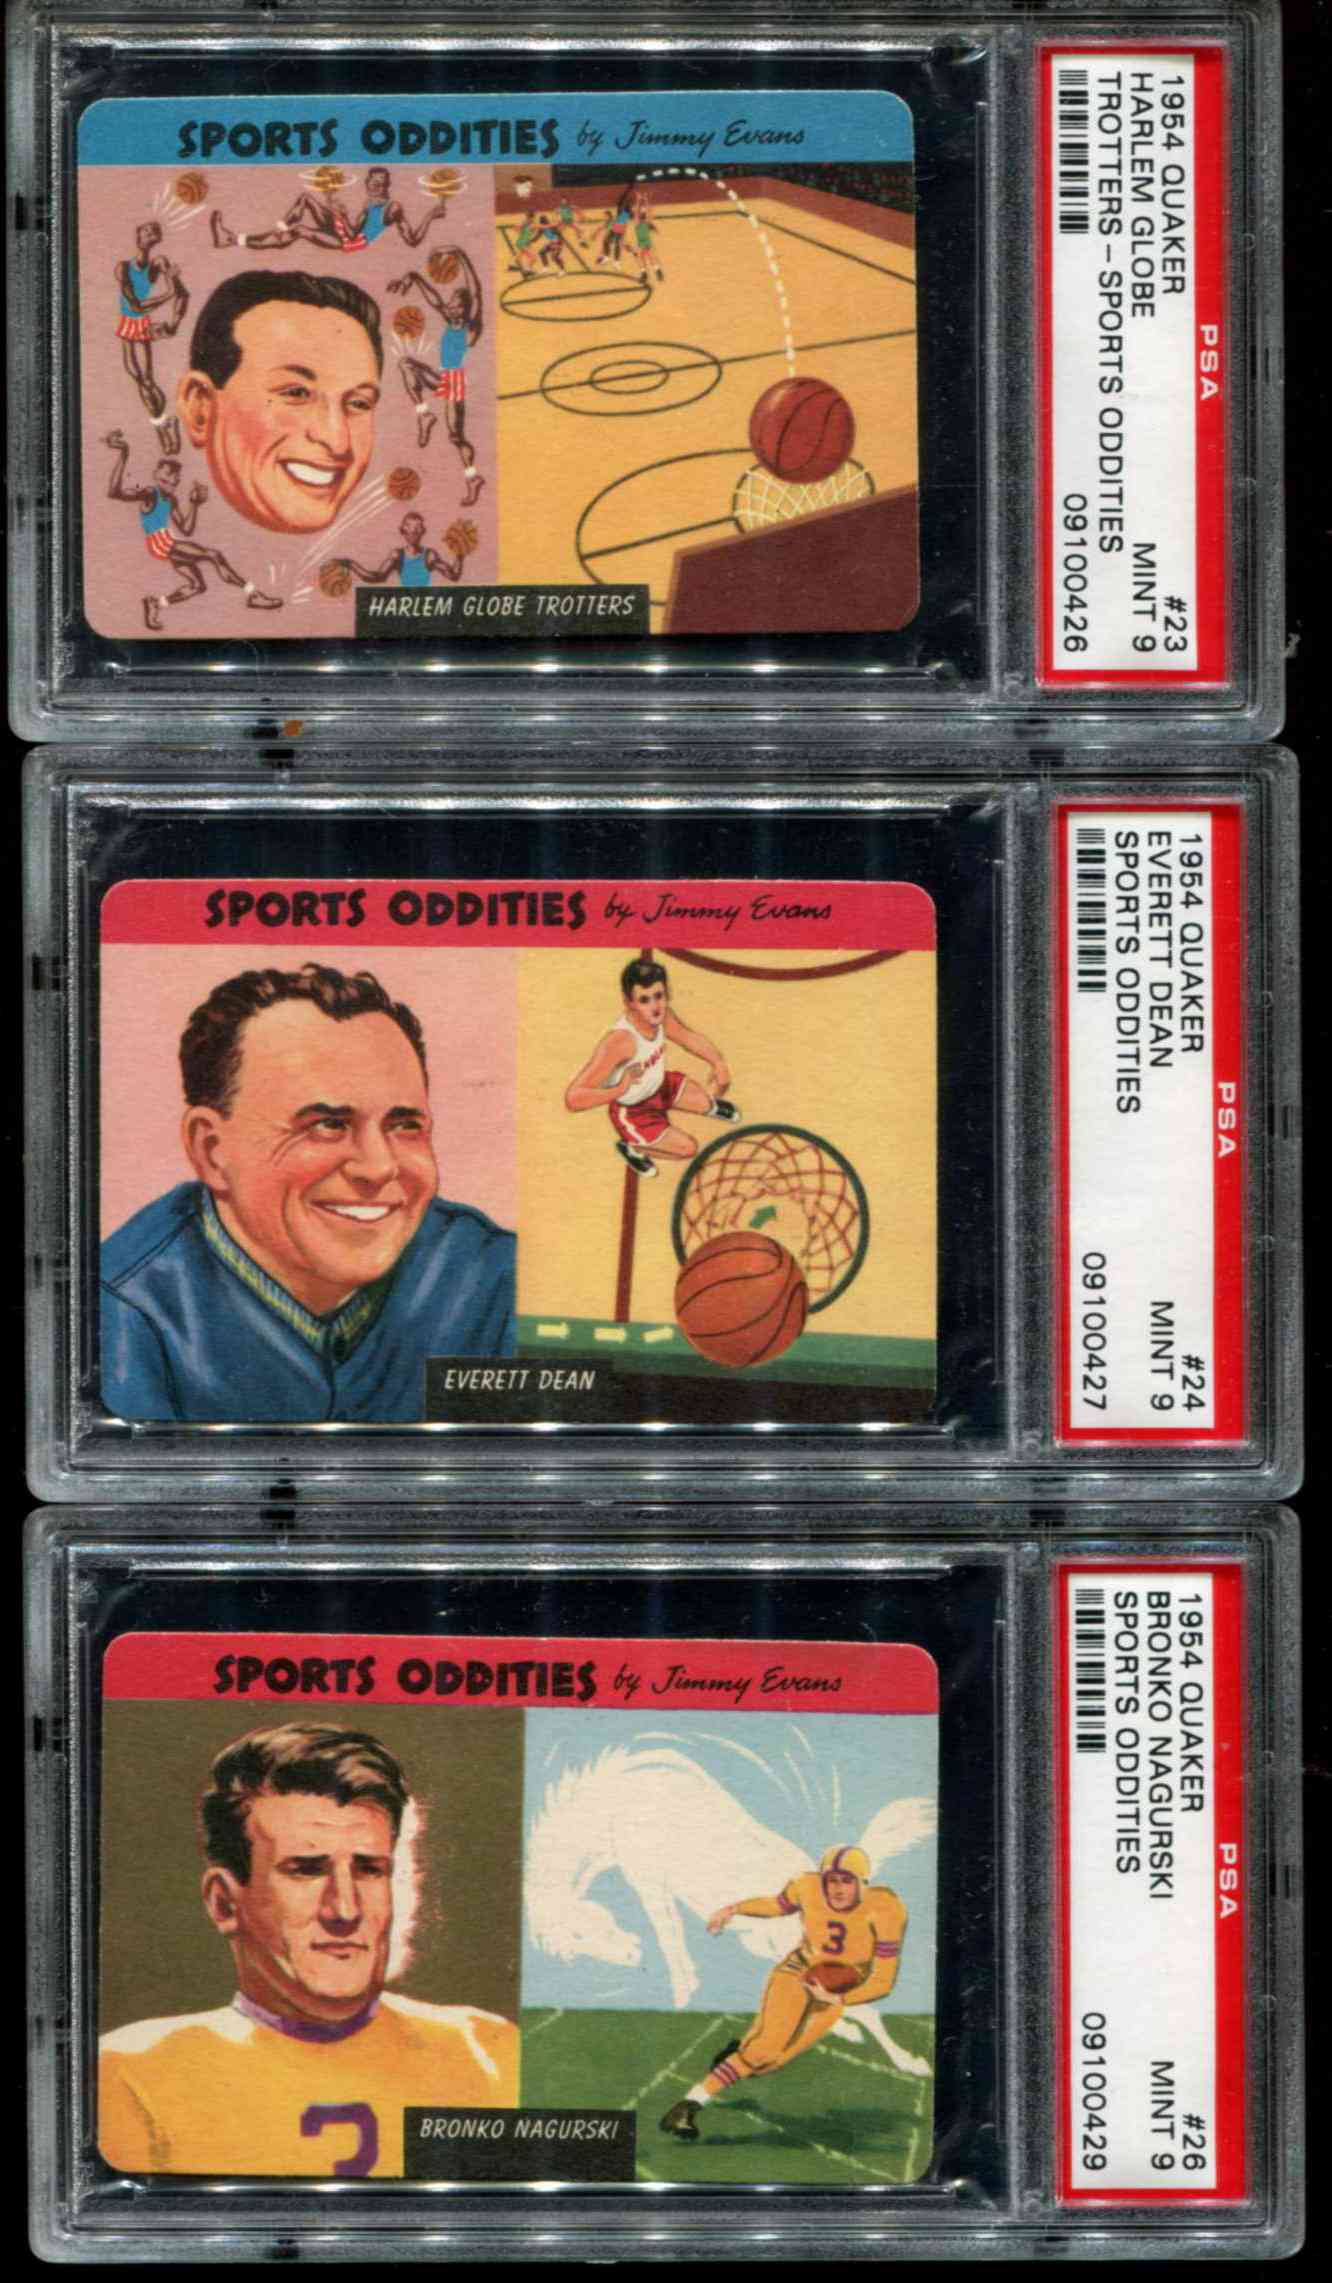 1954 Quaker Oats Sports Oddities #26 Bronko Nagurski (Football) Baseball cards value